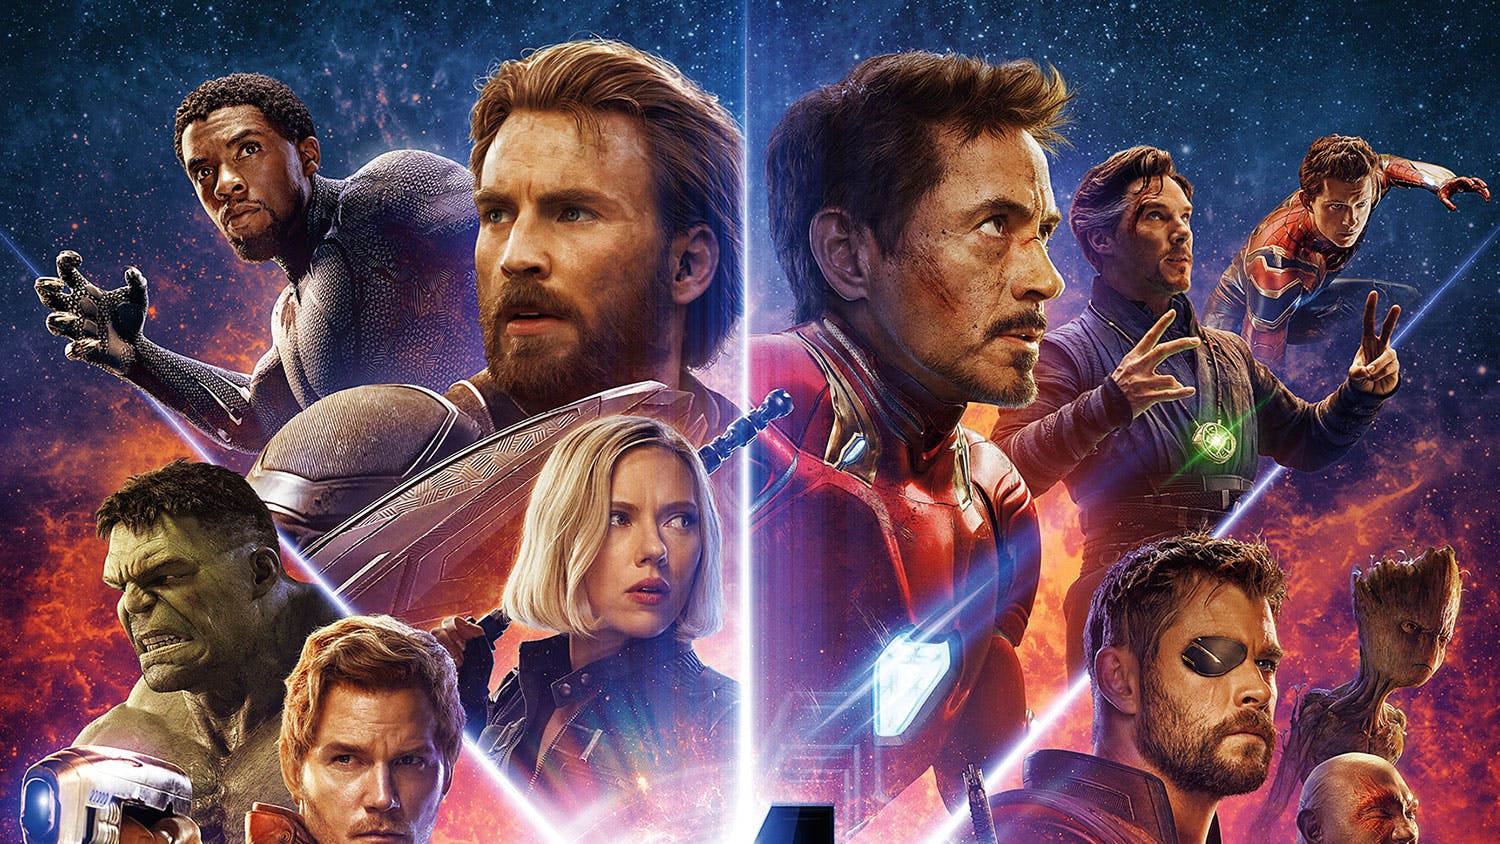 Avengers Infinity War IMAX Poster Has Hidden Easter Eggs 